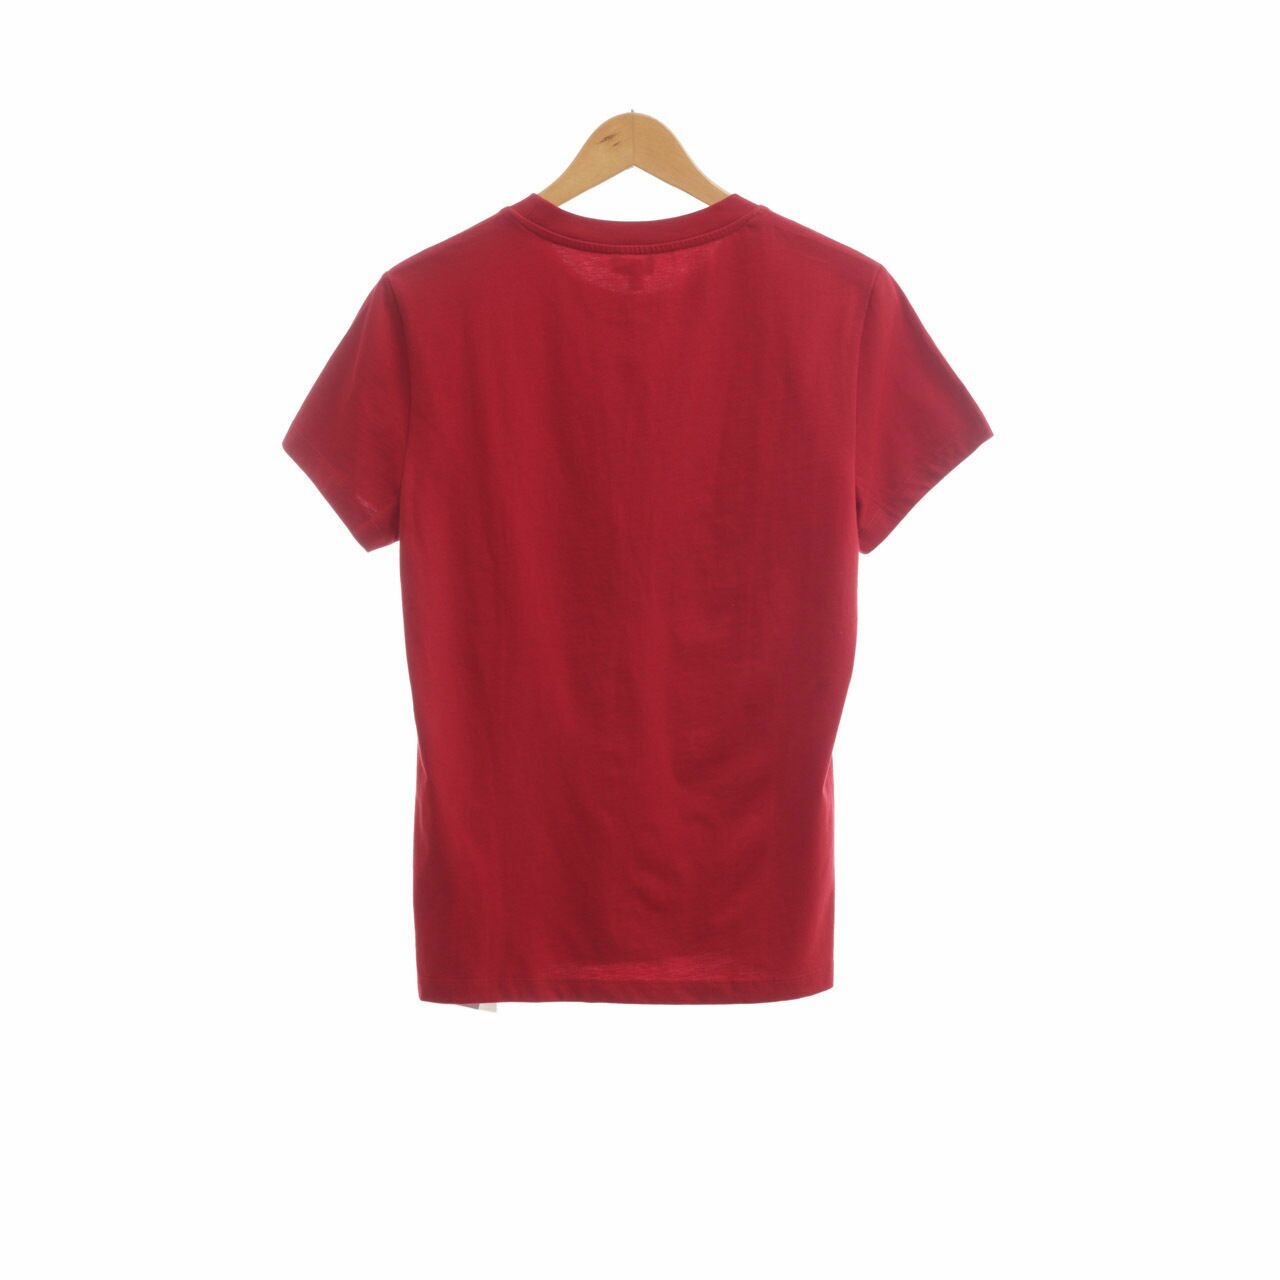 Kenzo Red Eye T-Shirt